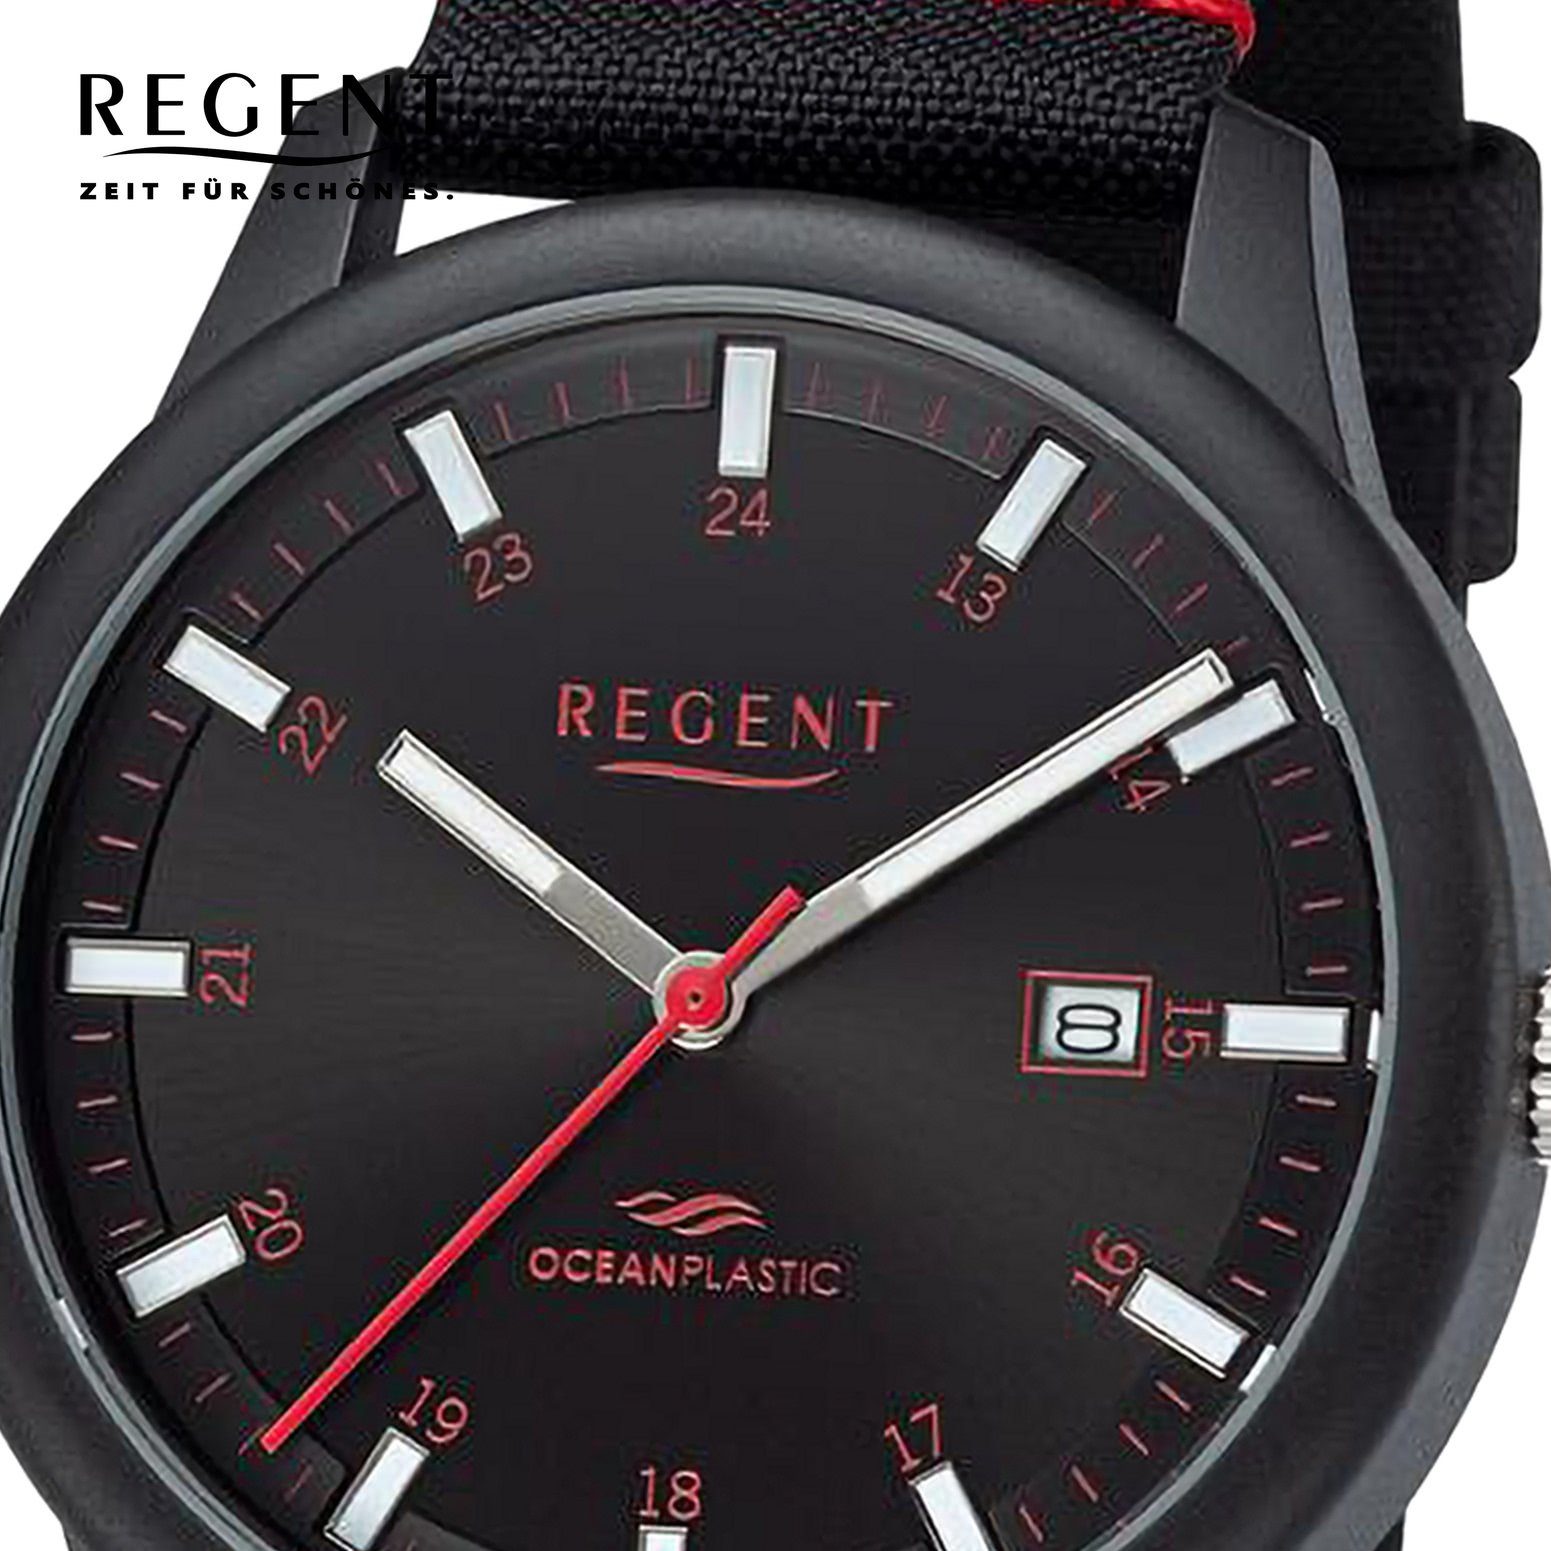 Quarzuhr Regent Armbanduhr Analog, groß 40mm), Herren (ca. Nylonarmband Armbanduhr extra rund, Regent Herren